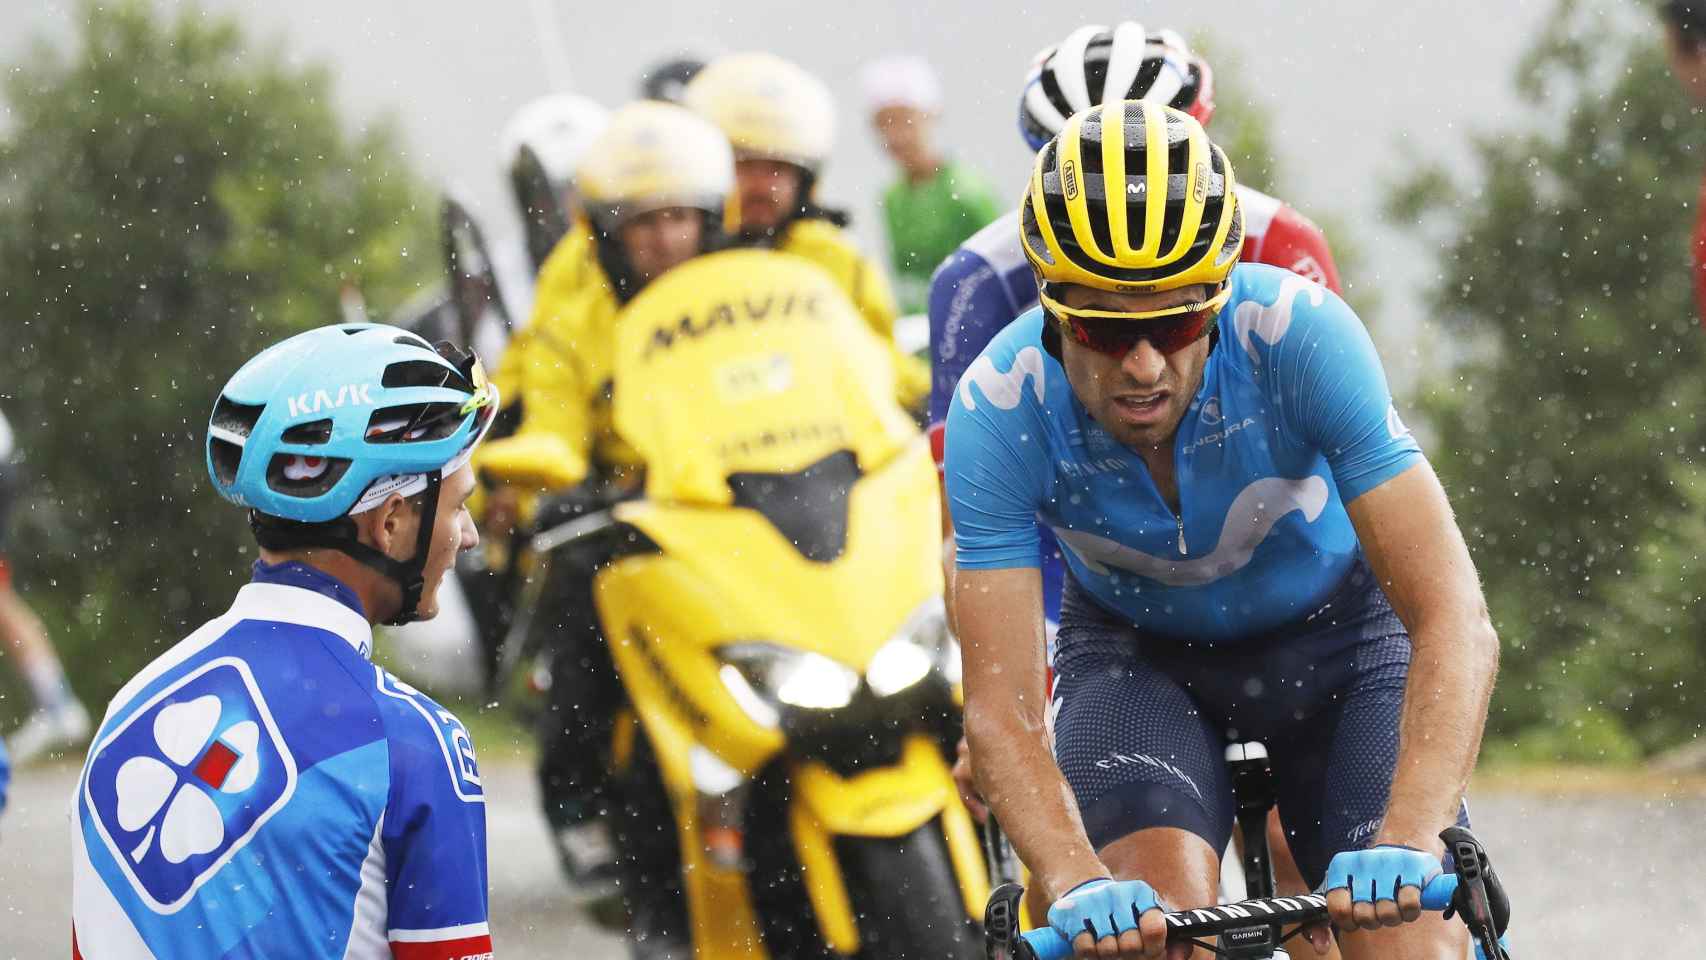 Mikel Landa, en la 15ª etapa del Tour de Francia